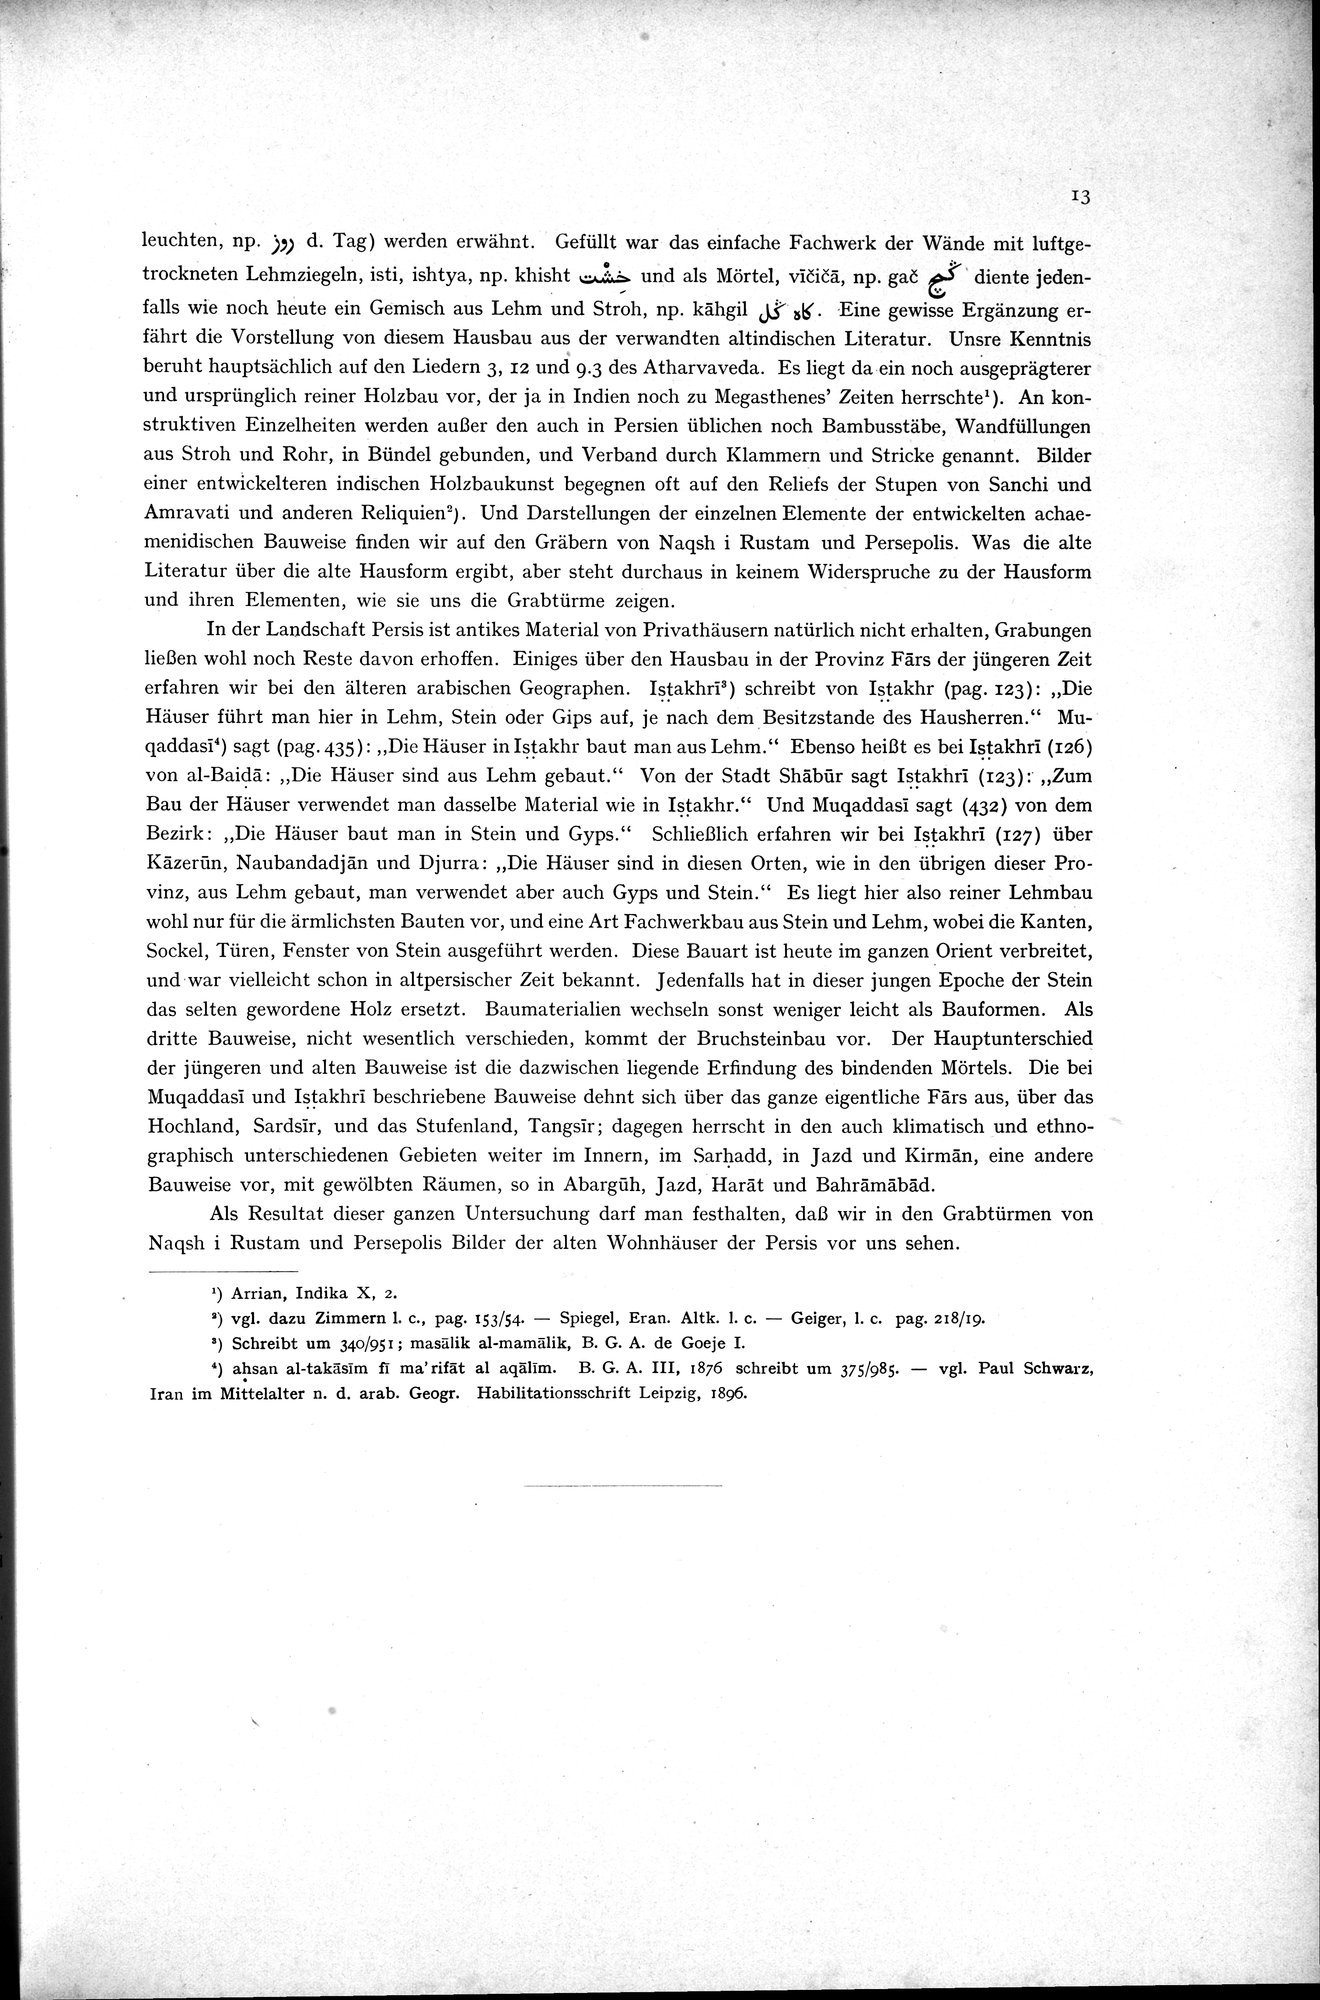 Iranische Felsreliefs : vol.1 / Page 25 (Grayscale High Resolution Image)